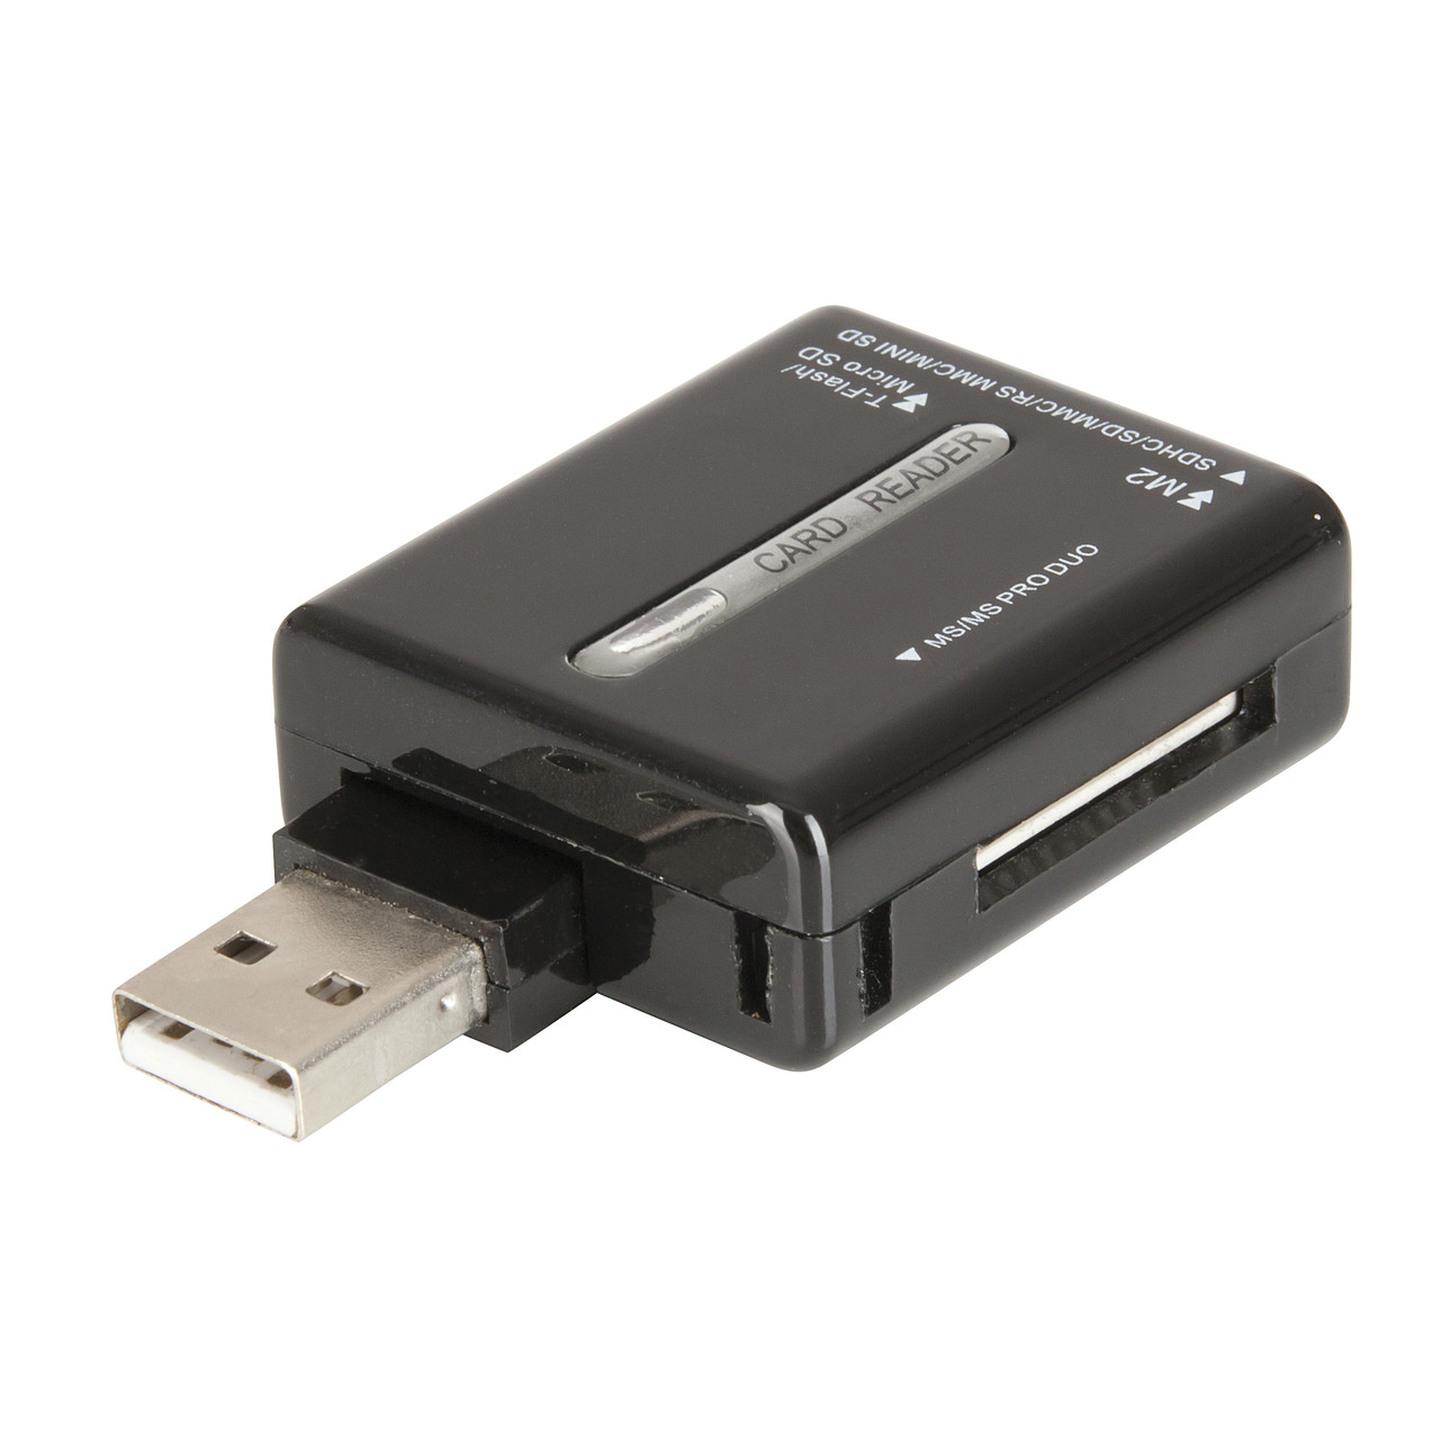 Compact USB2.0 Multi-Card Reader